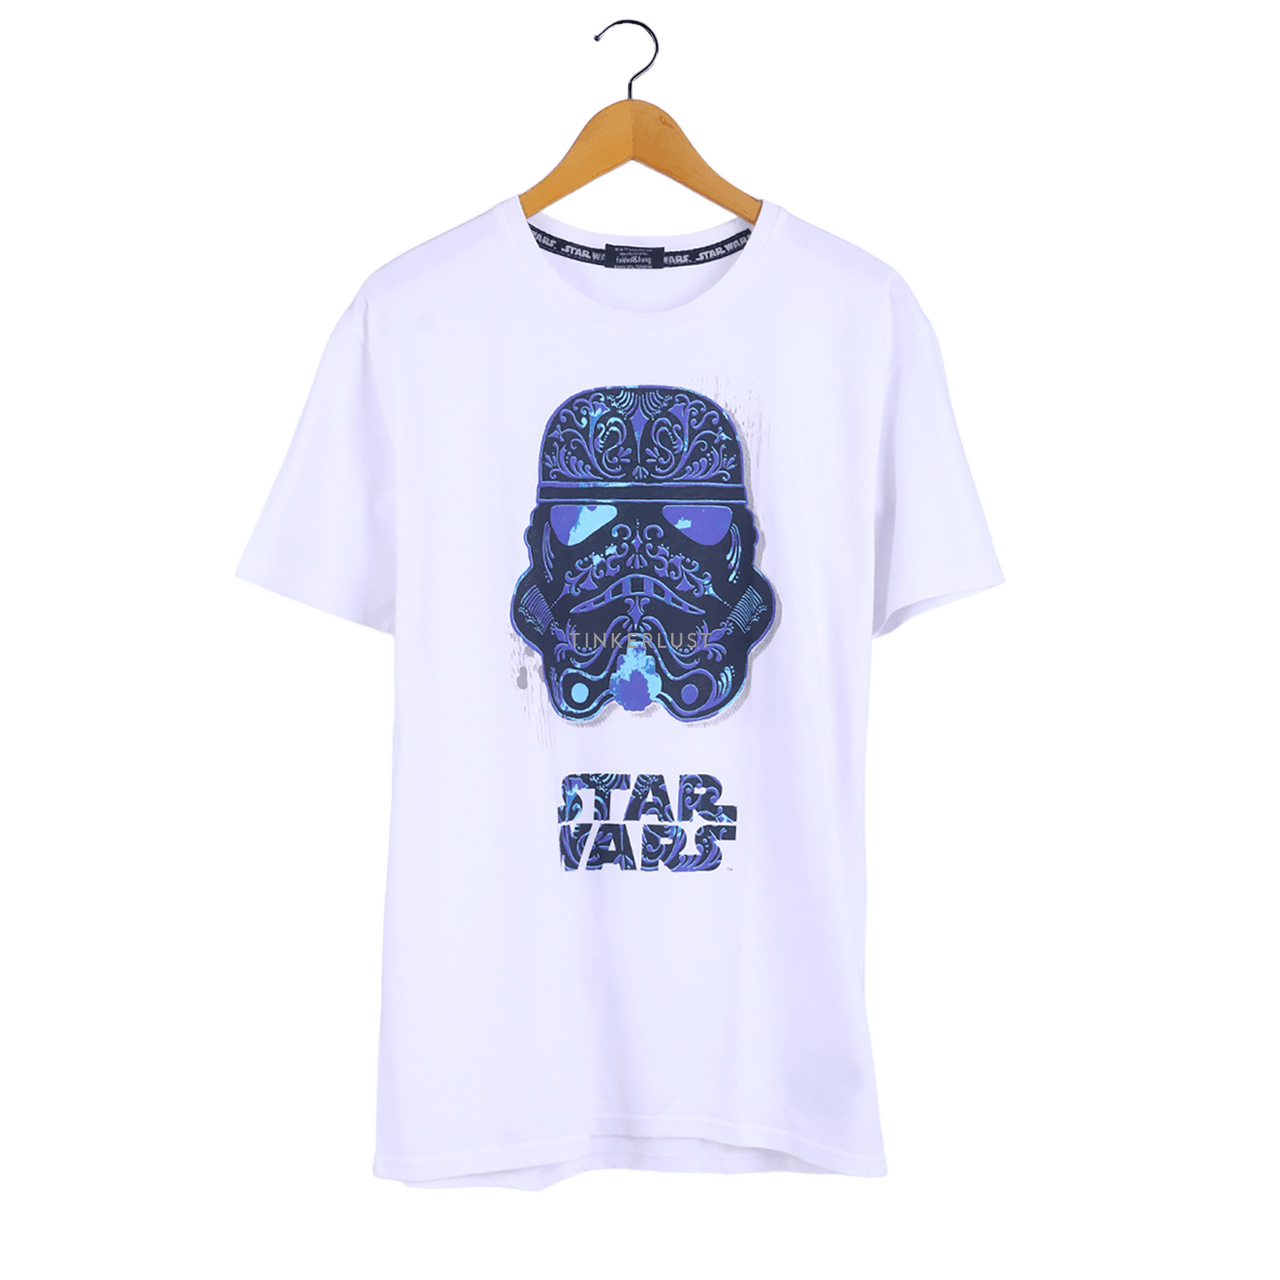 Star Wars White T-shirt